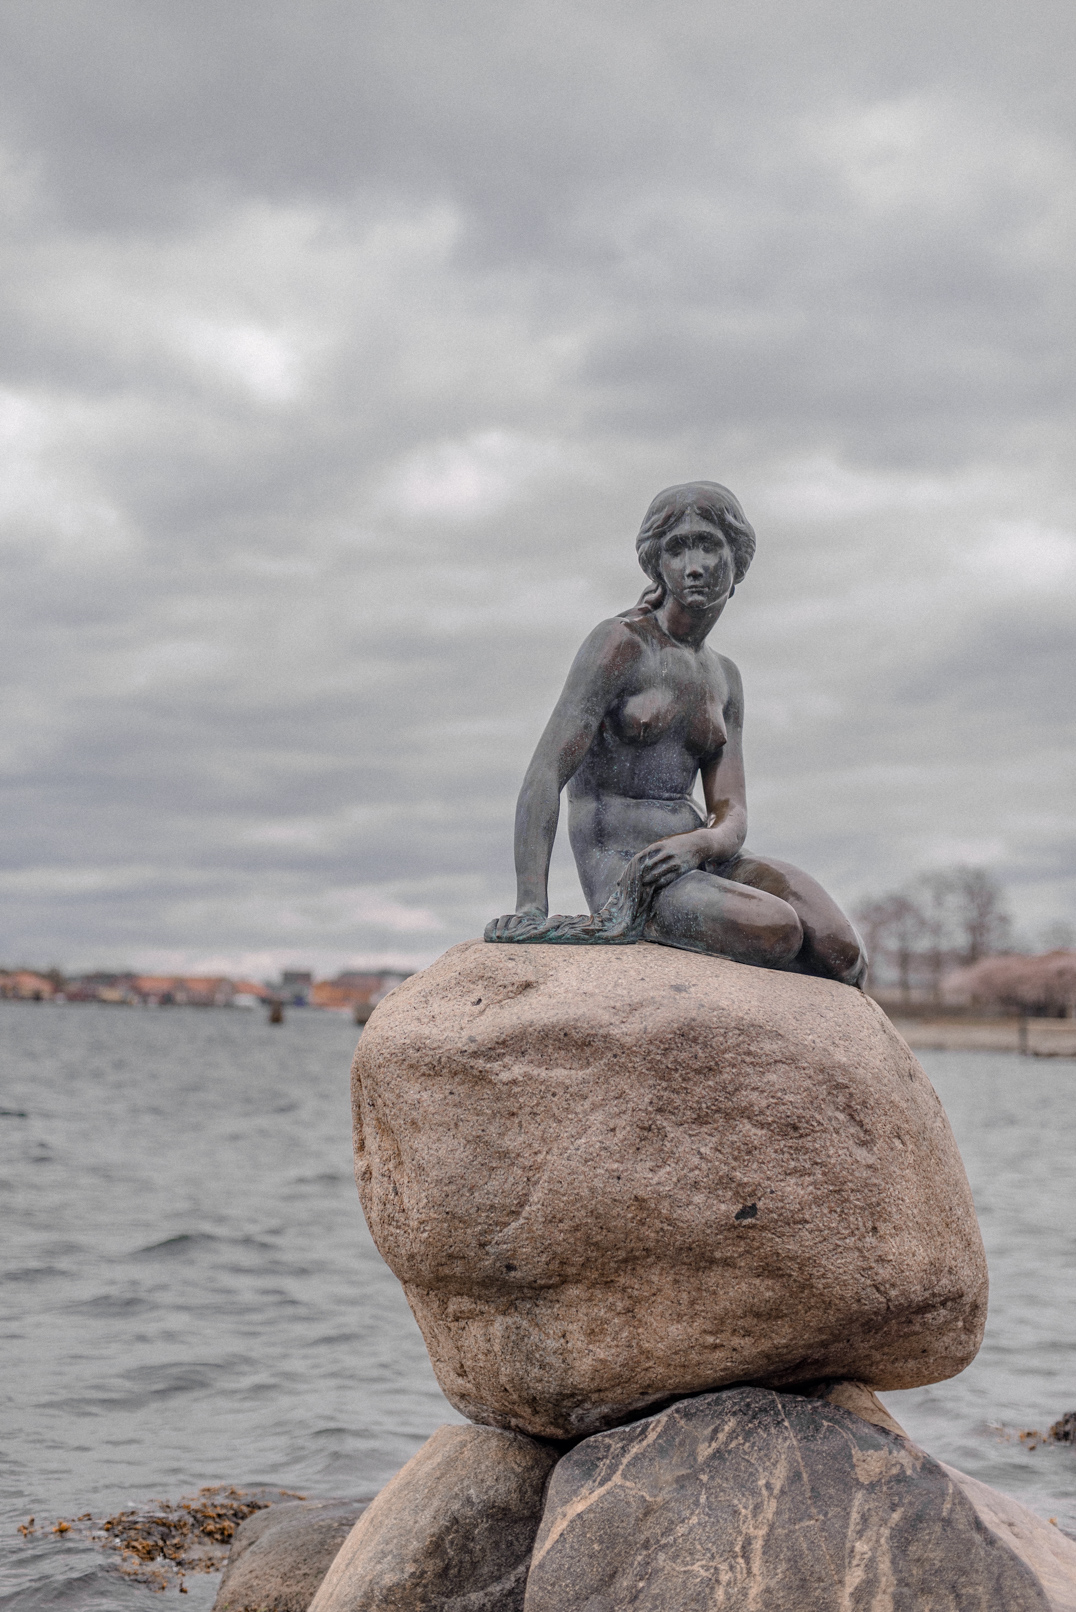 Travel around Europe - The little mermaid in Denmark